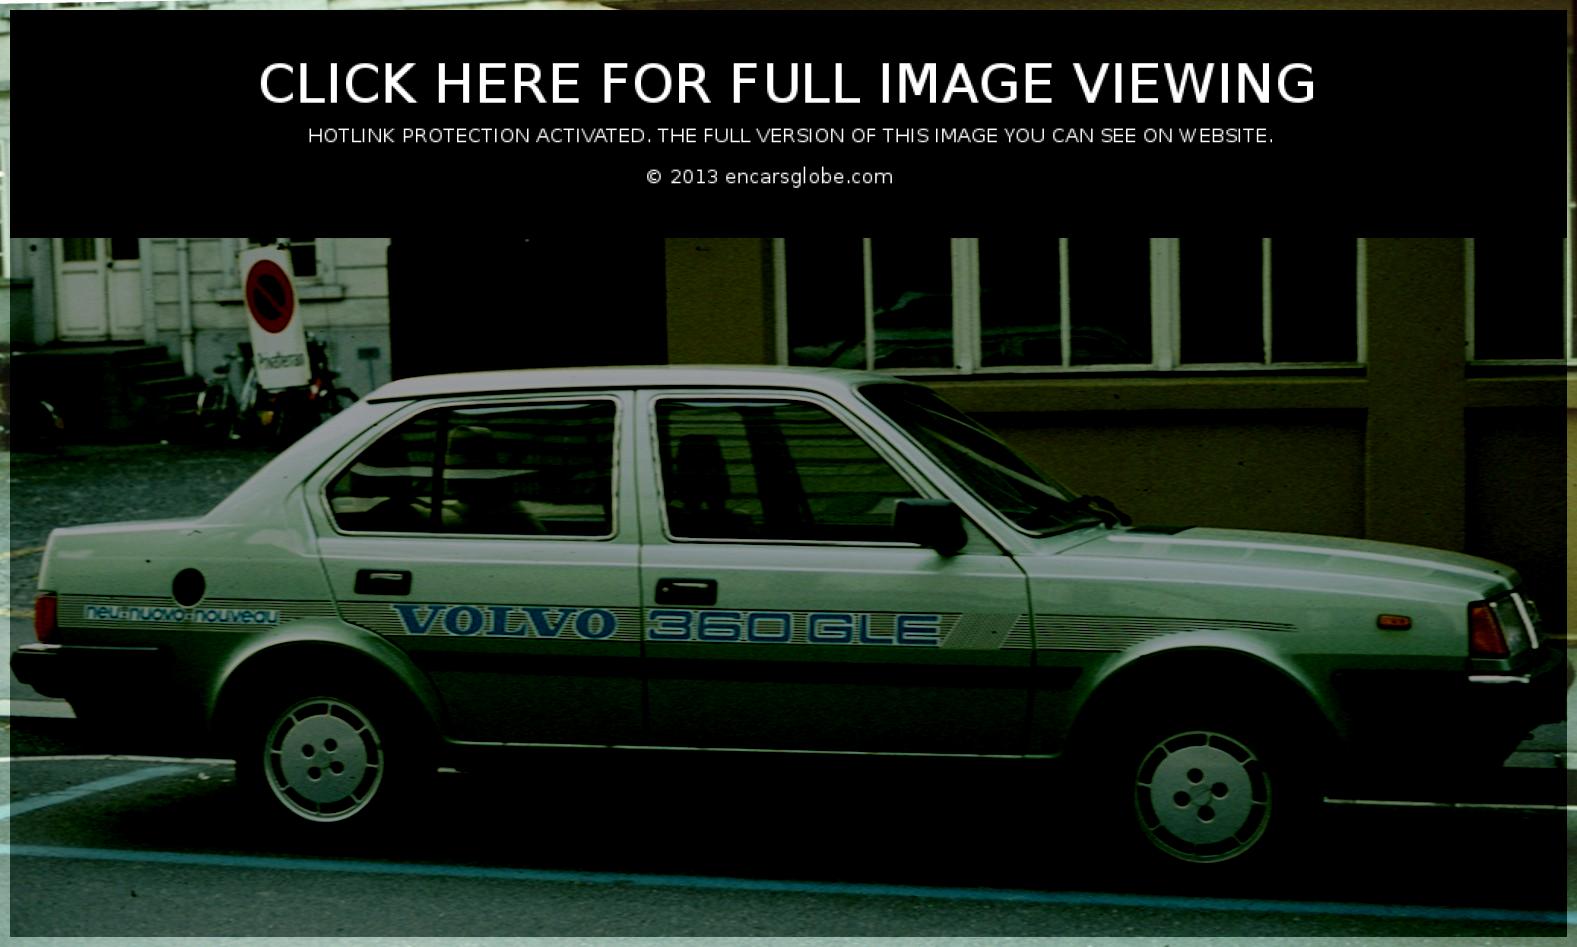 Volvo 360 GLE Image â„–: 02 image. Size: 1577 x 947 px | 30038 views